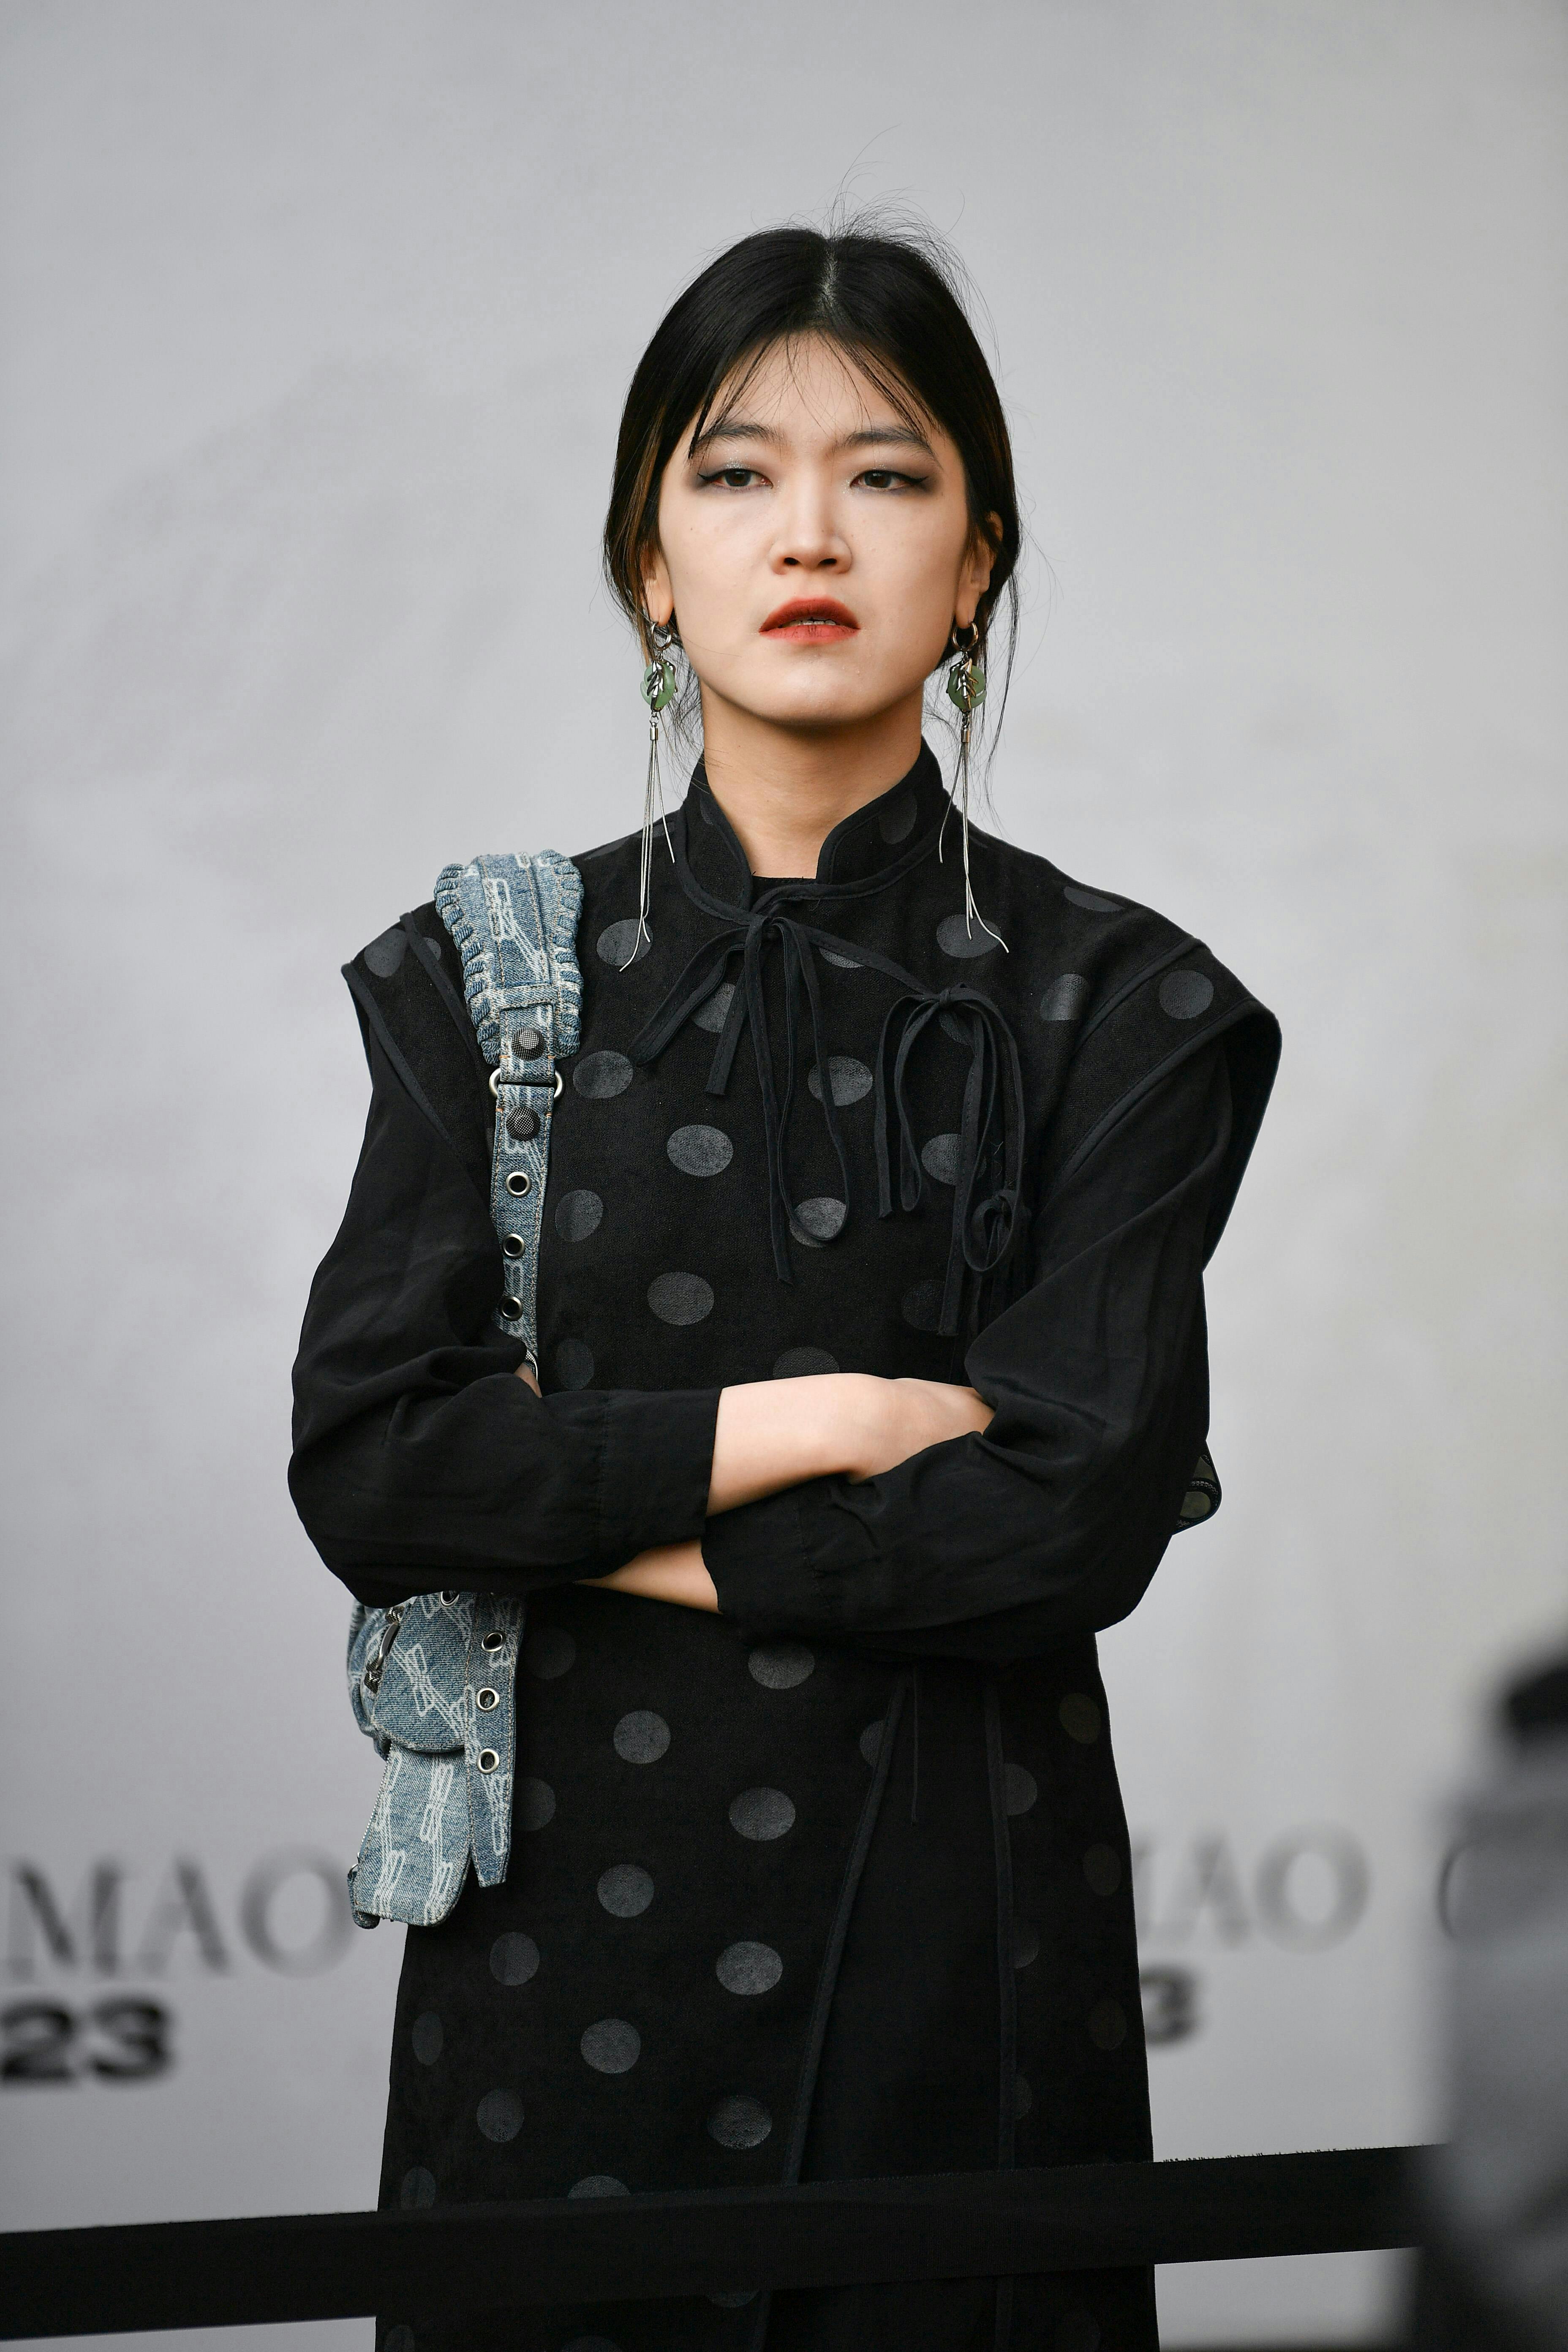 beijing coat long sleeve fashion black hair person adult female woman dress formal wear